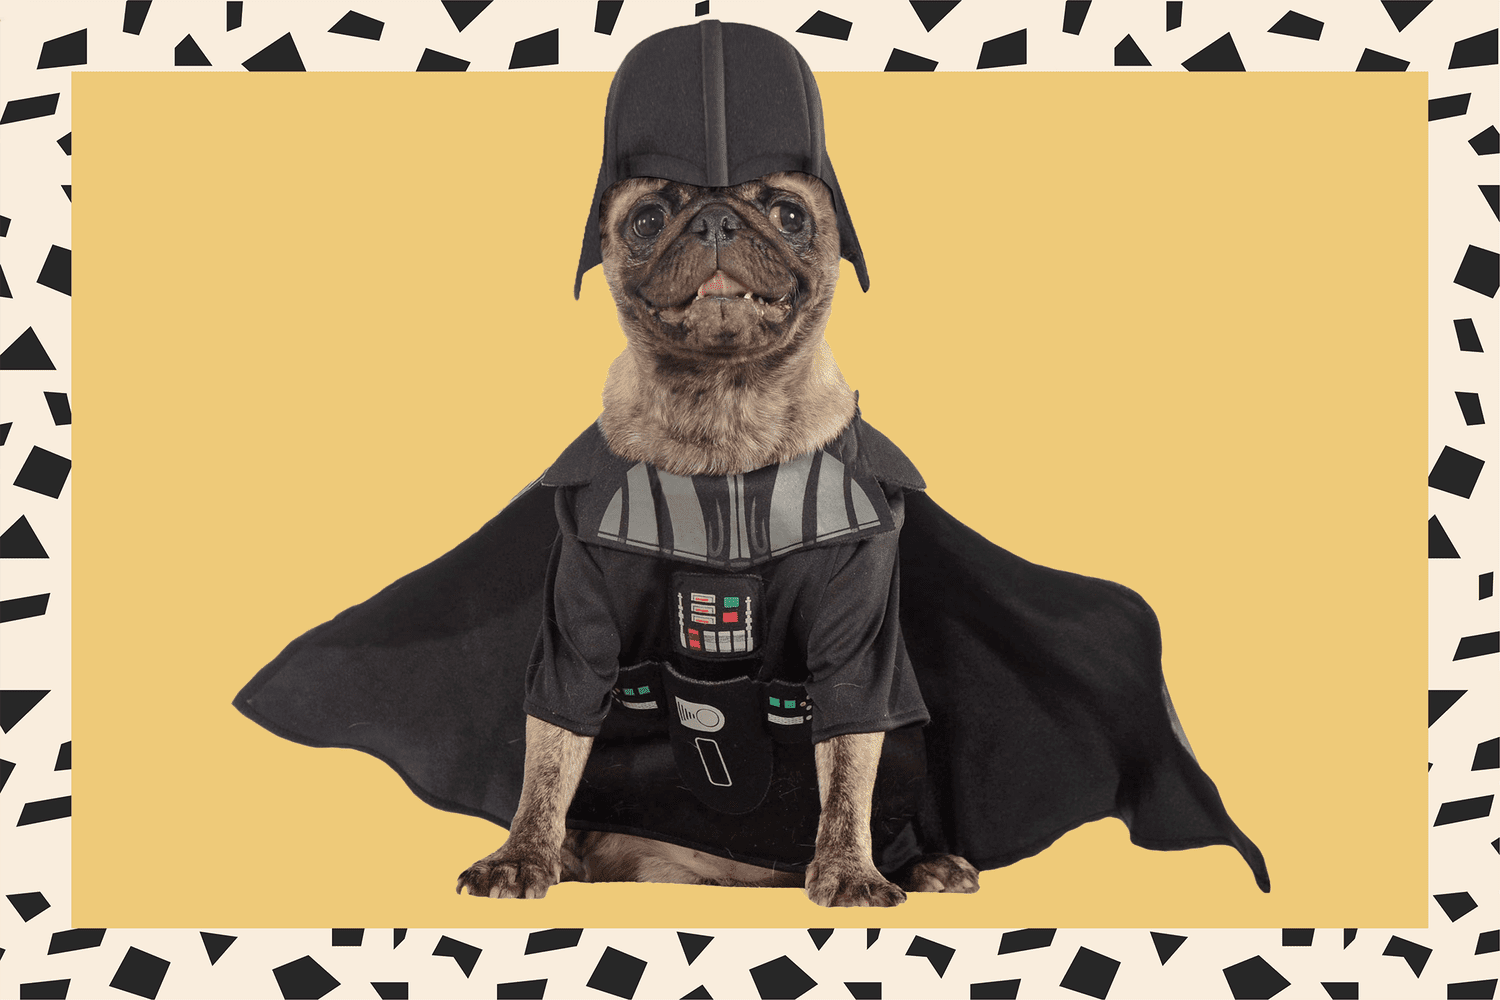 Star Wars Darth Vader dog costume